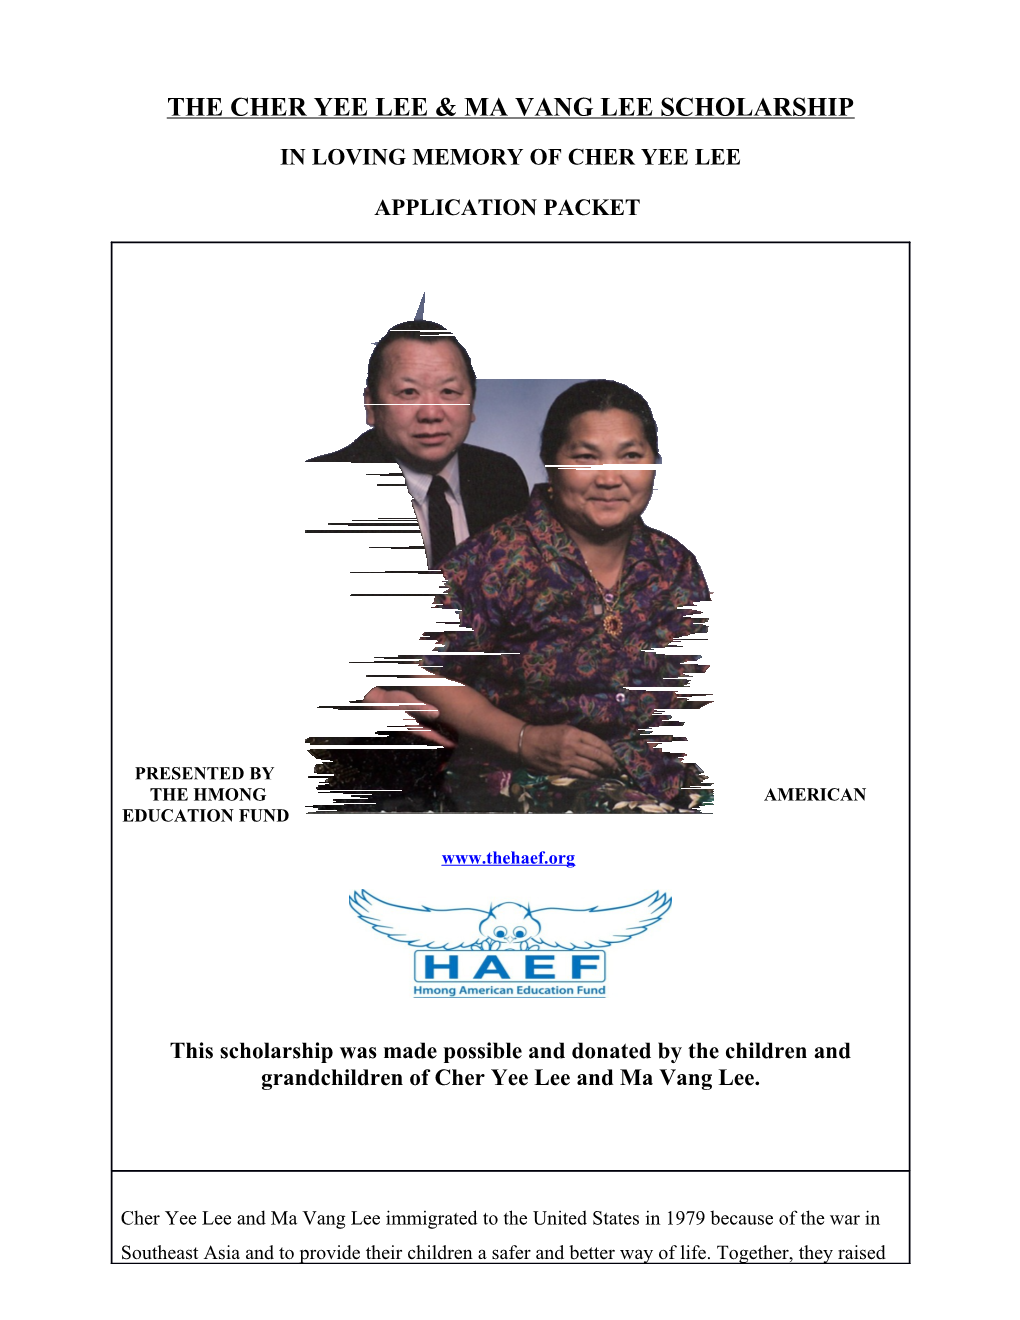 The Cher Yee Lee & Ma Vang Lee Scholarship